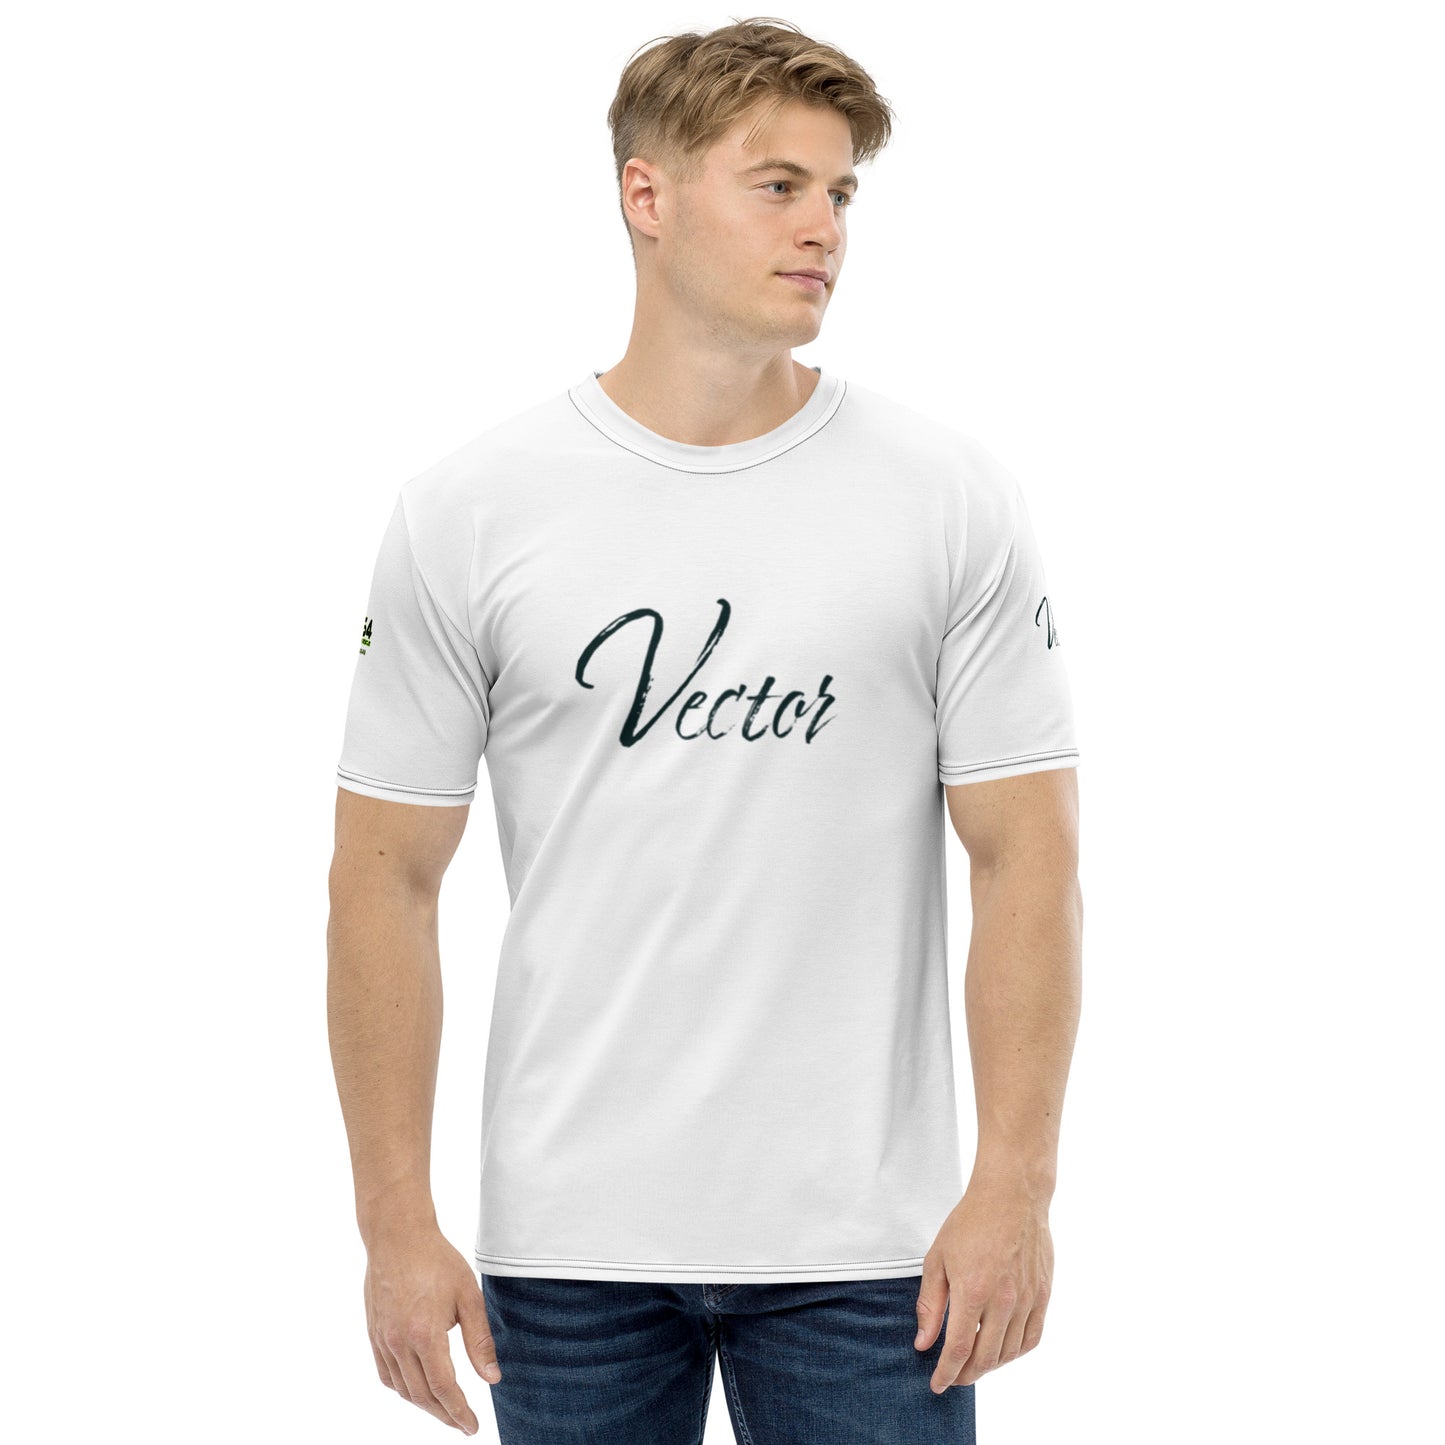 Vector VI USA 954 Men's t-shirt